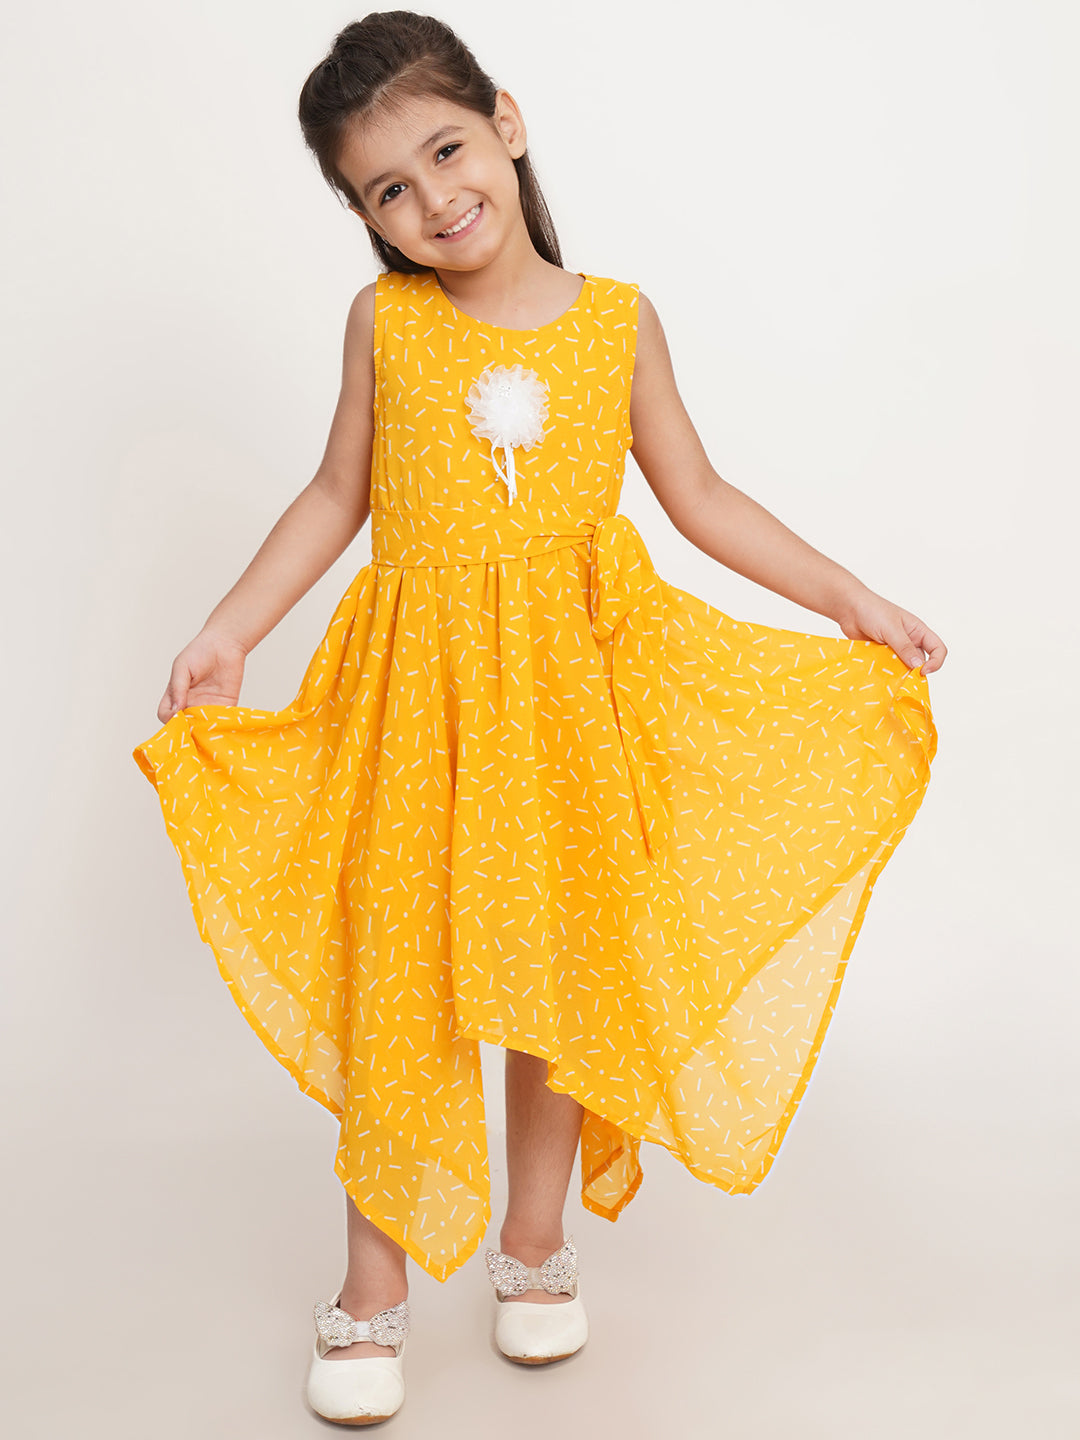 CREATIVE KID'S Childrens Yellow & White Geometry Print High-Low Dress